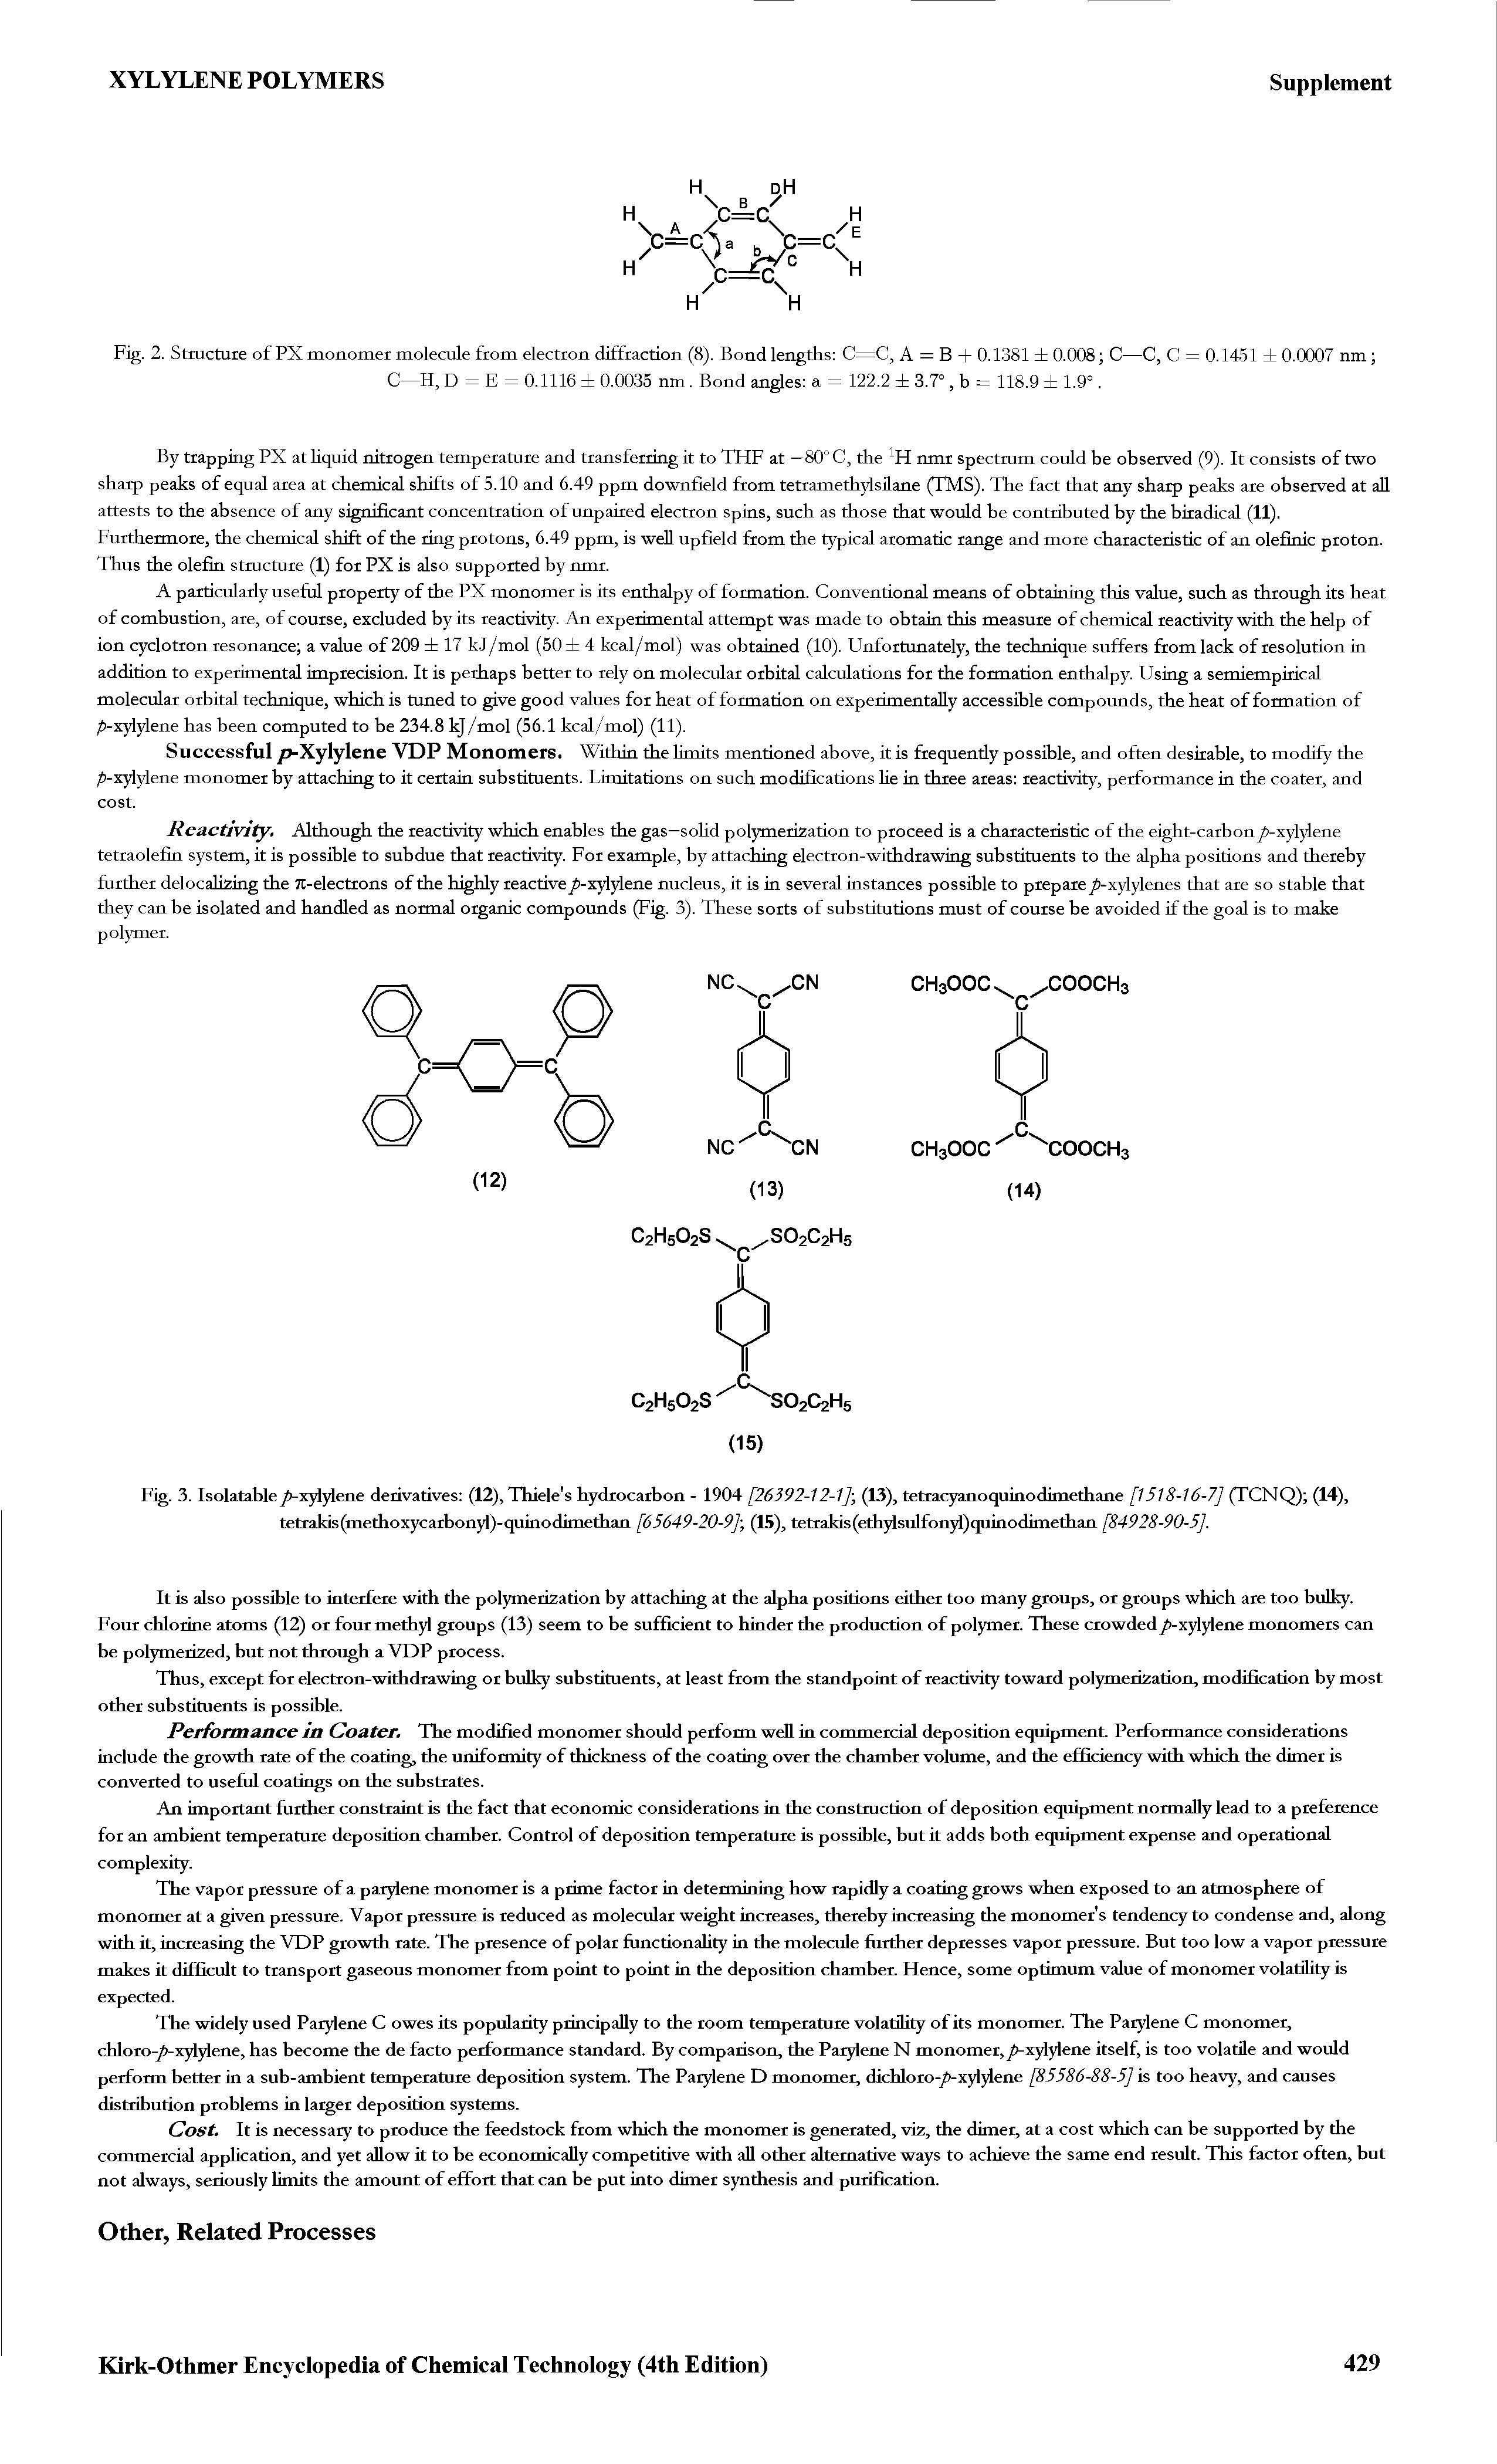 Fig. 3. Isolatable />-xylylene derivatives (12), Thiele s hydrocarbon - 1904 [26392-12-1] (13), tetracyanoquinodimethane [1518-16-7] (TCNQ) (14), tetrakis(methoxycarbonyl)-quinodimethan [65649-20-9] (15), tetrakis(ethylsulfonyl)quinodimethan [84928-90-5].